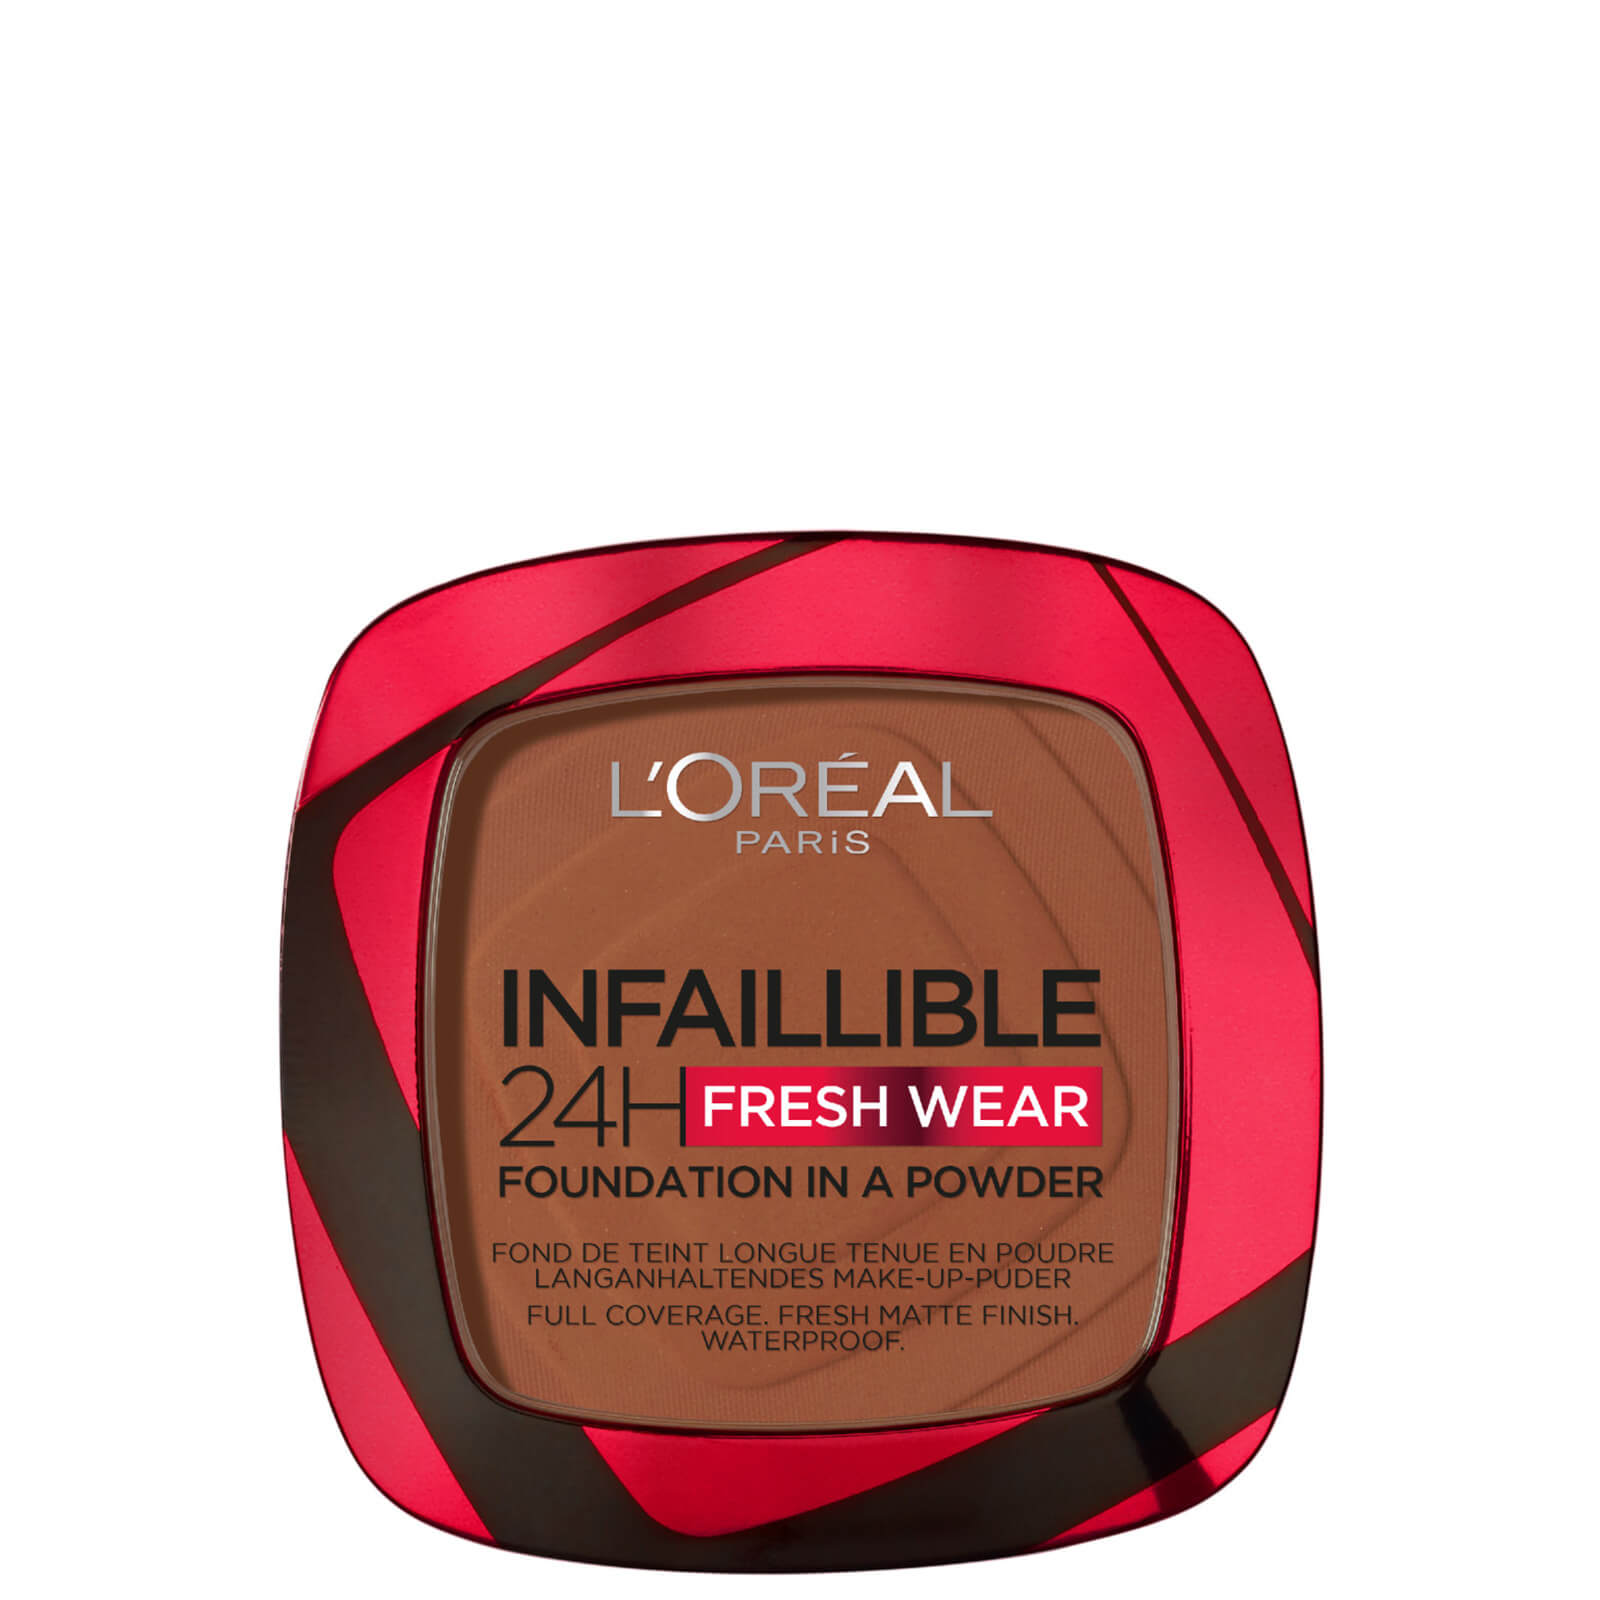 L'Oreal Paris Infallible 24 Hour Fresh Wear Foundation Powder 9g (Various Shades) - 375 Deep Amber